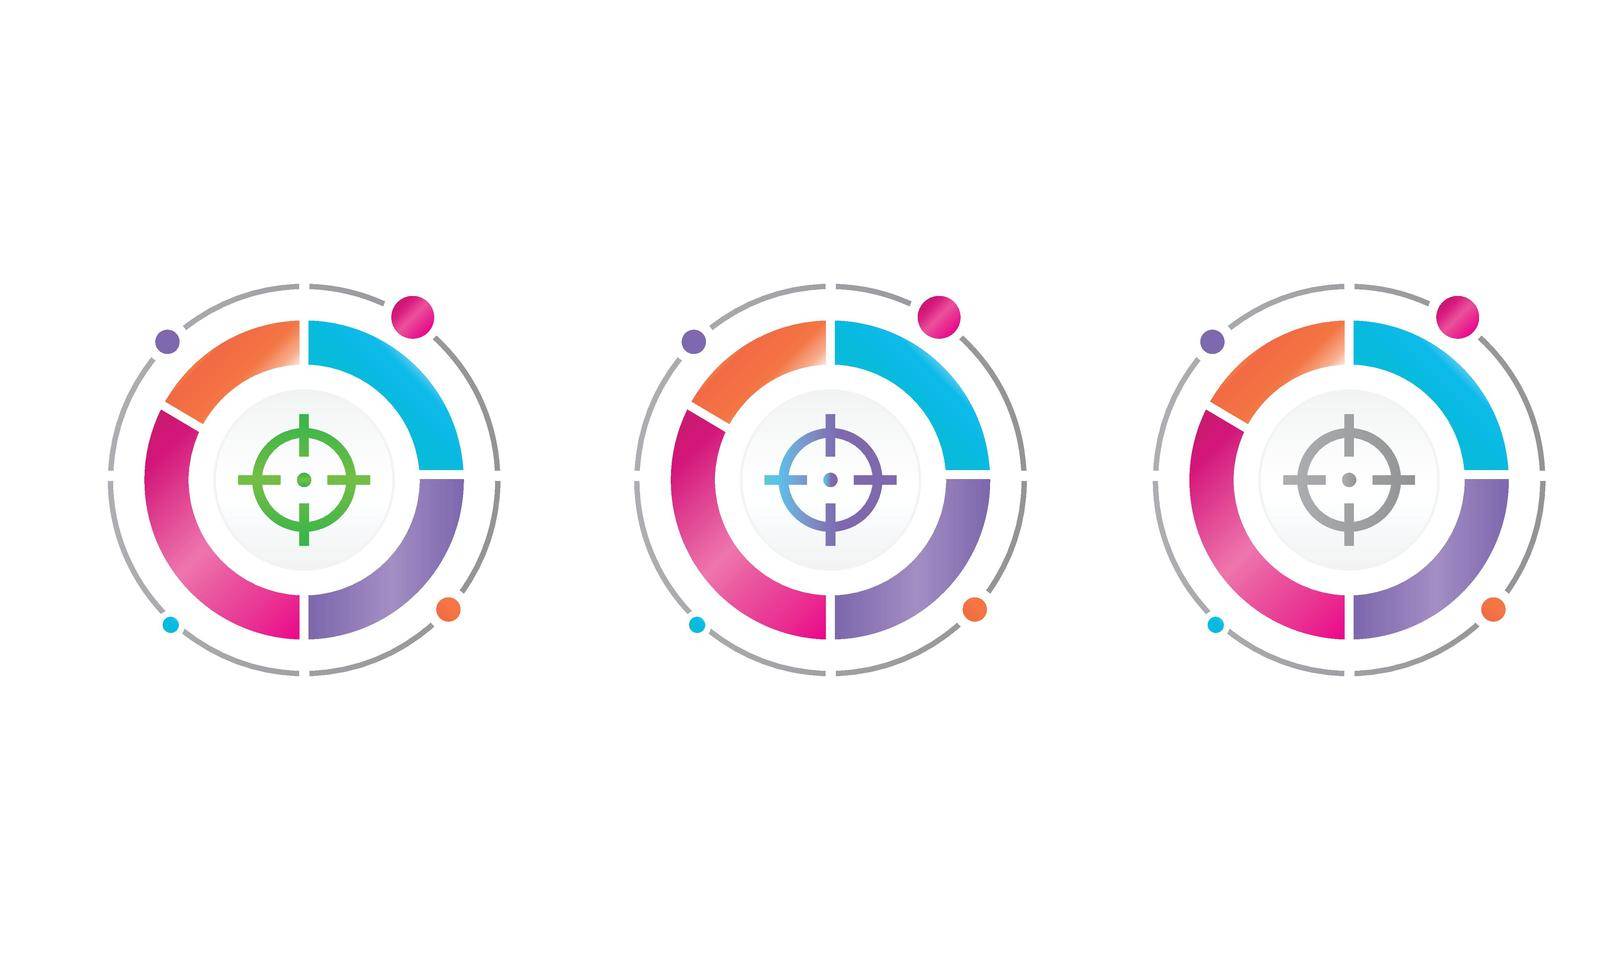 circle diagram with target icon . vector icon concept